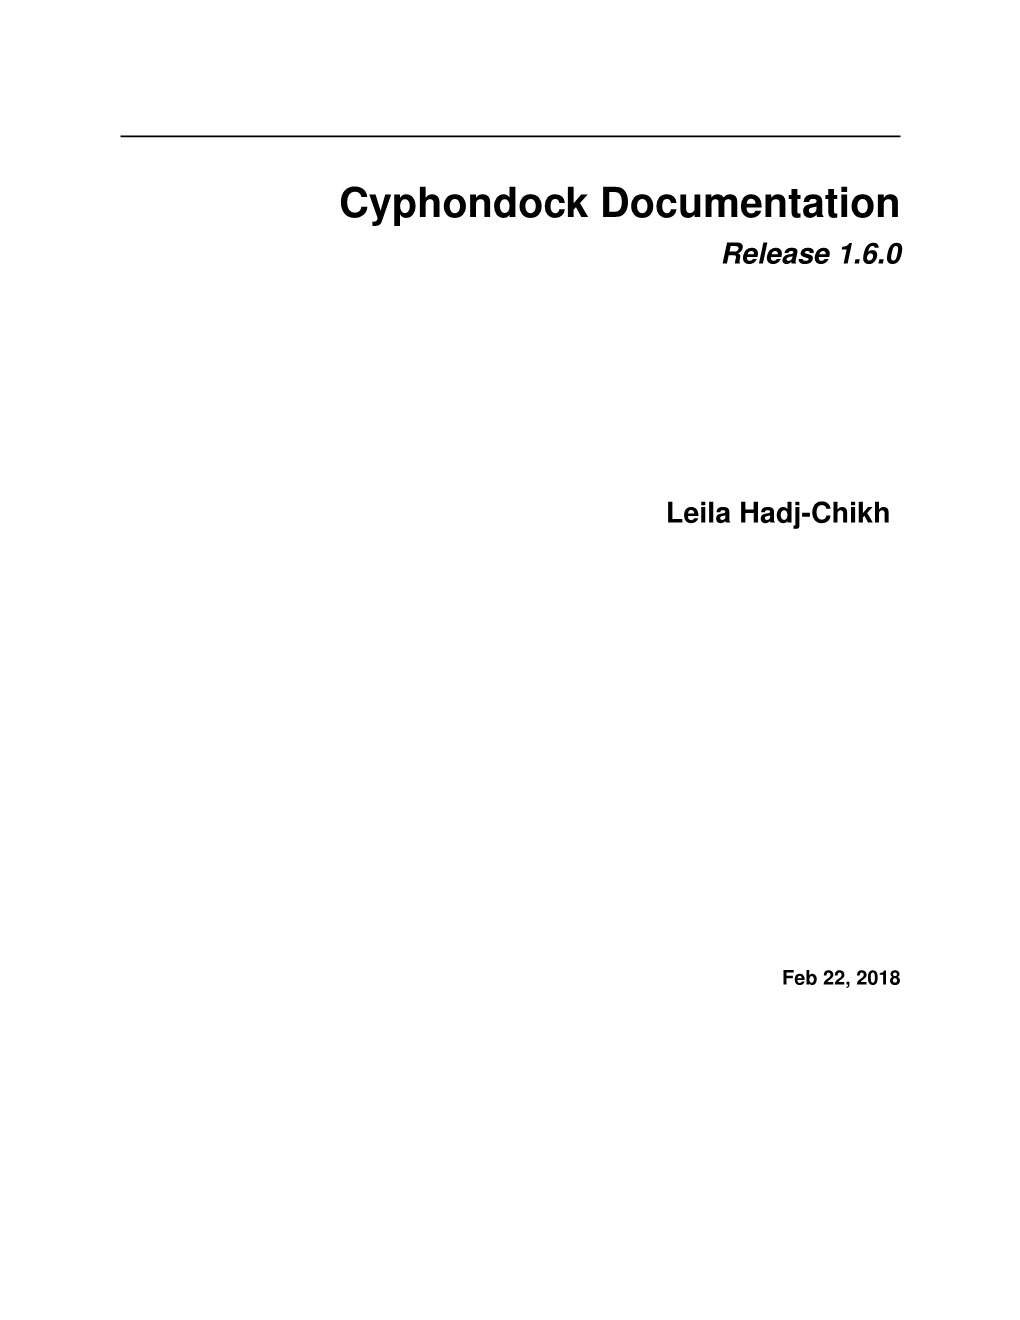 Cyphondock Documentation Release 1.6.0 Leila Hadj-Chikh